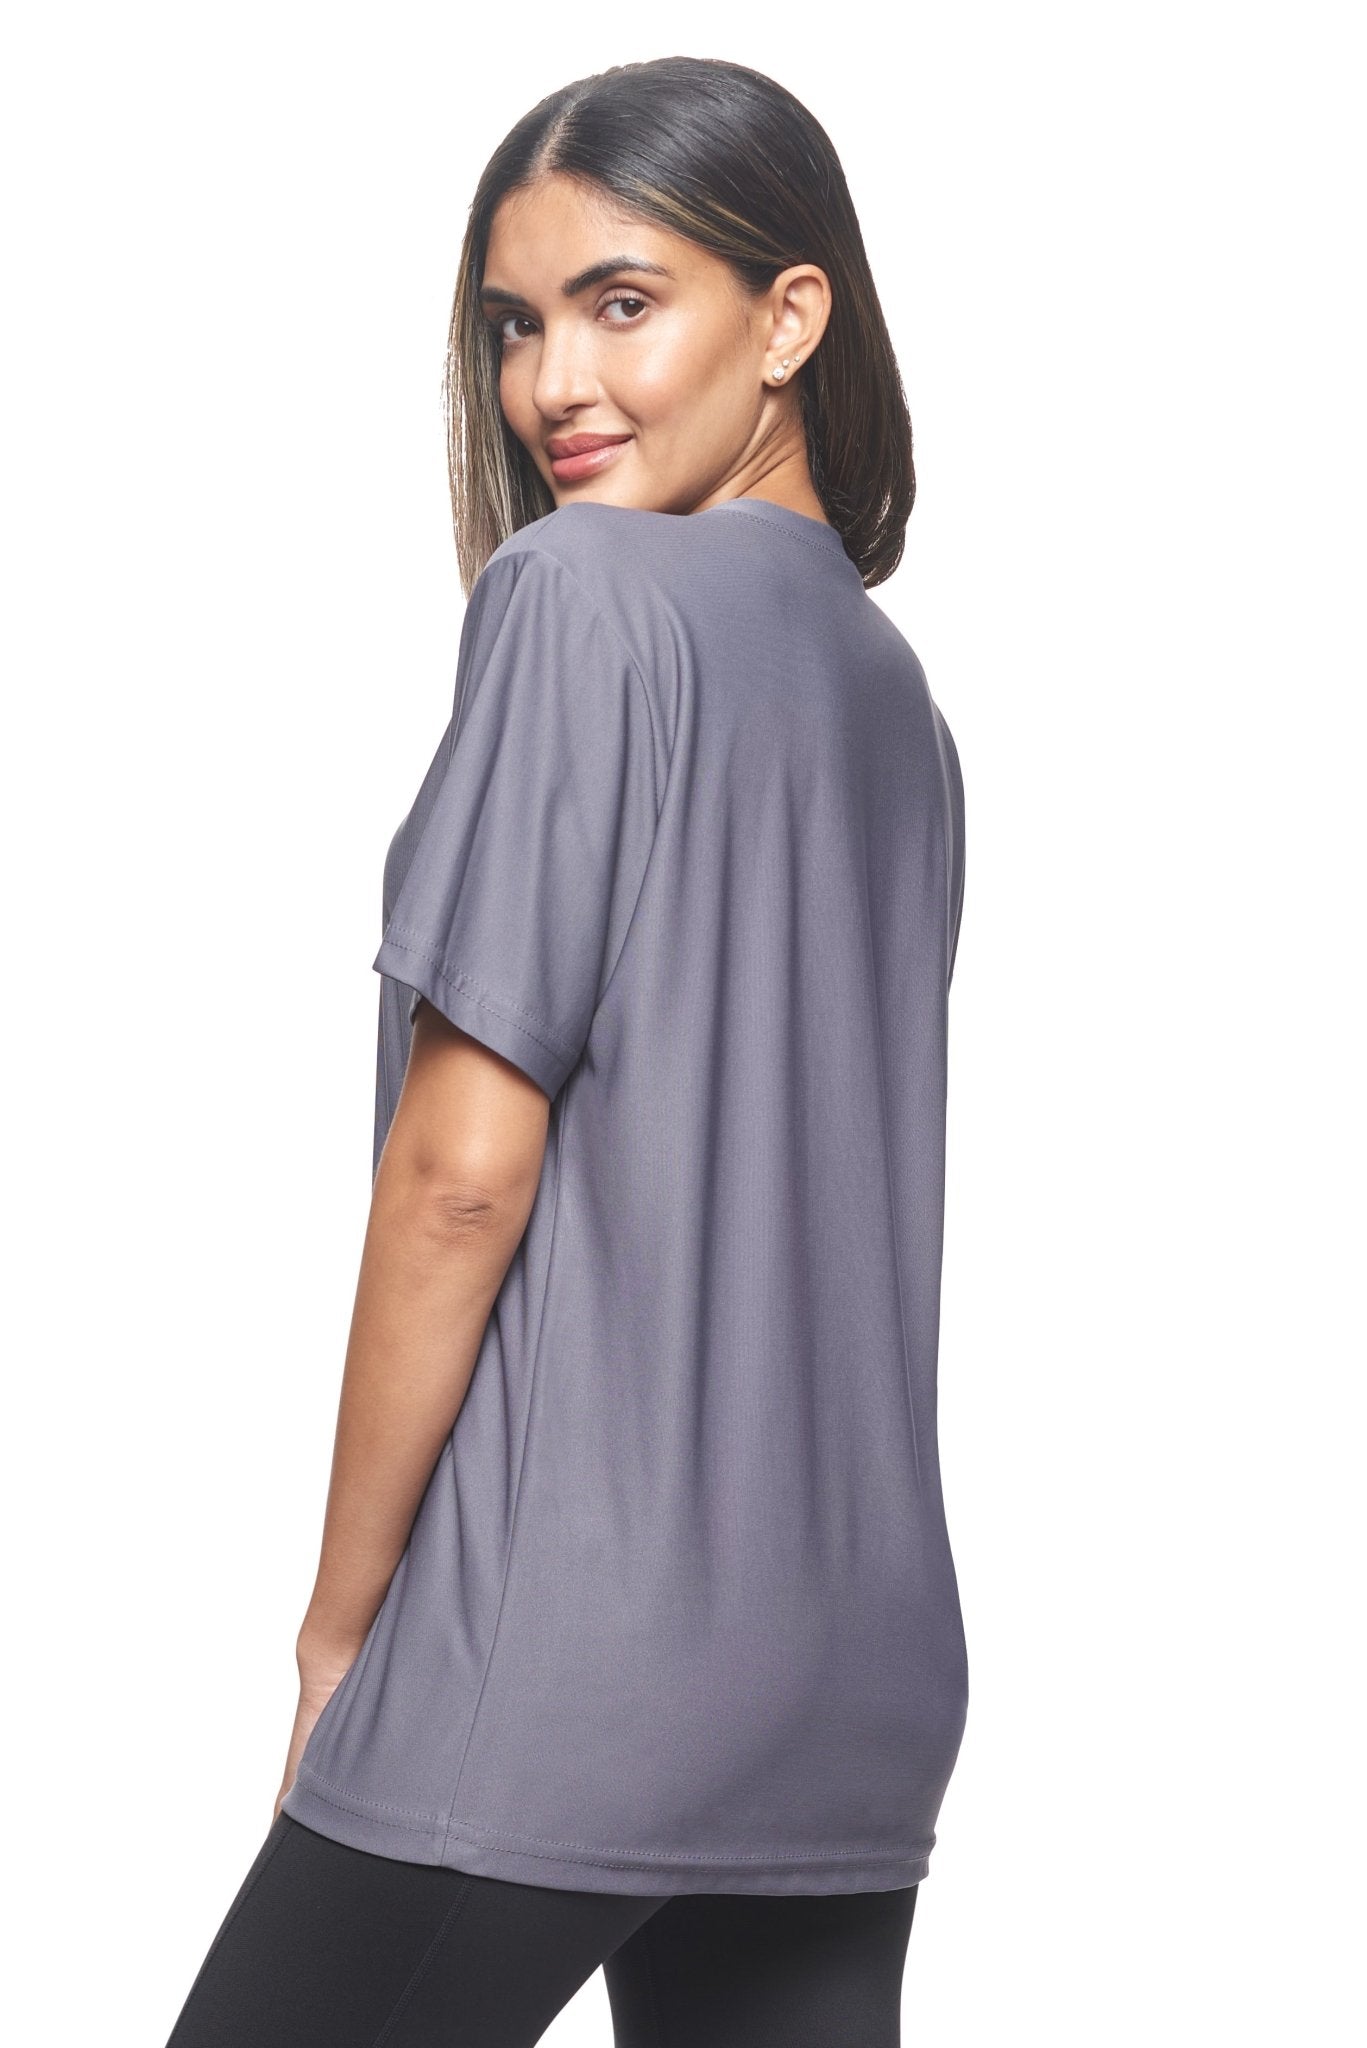 Expert Brand Unisex 100% Recycled Ecotek Tec Tee T-Shirt - Plus - DressbarnActivewear